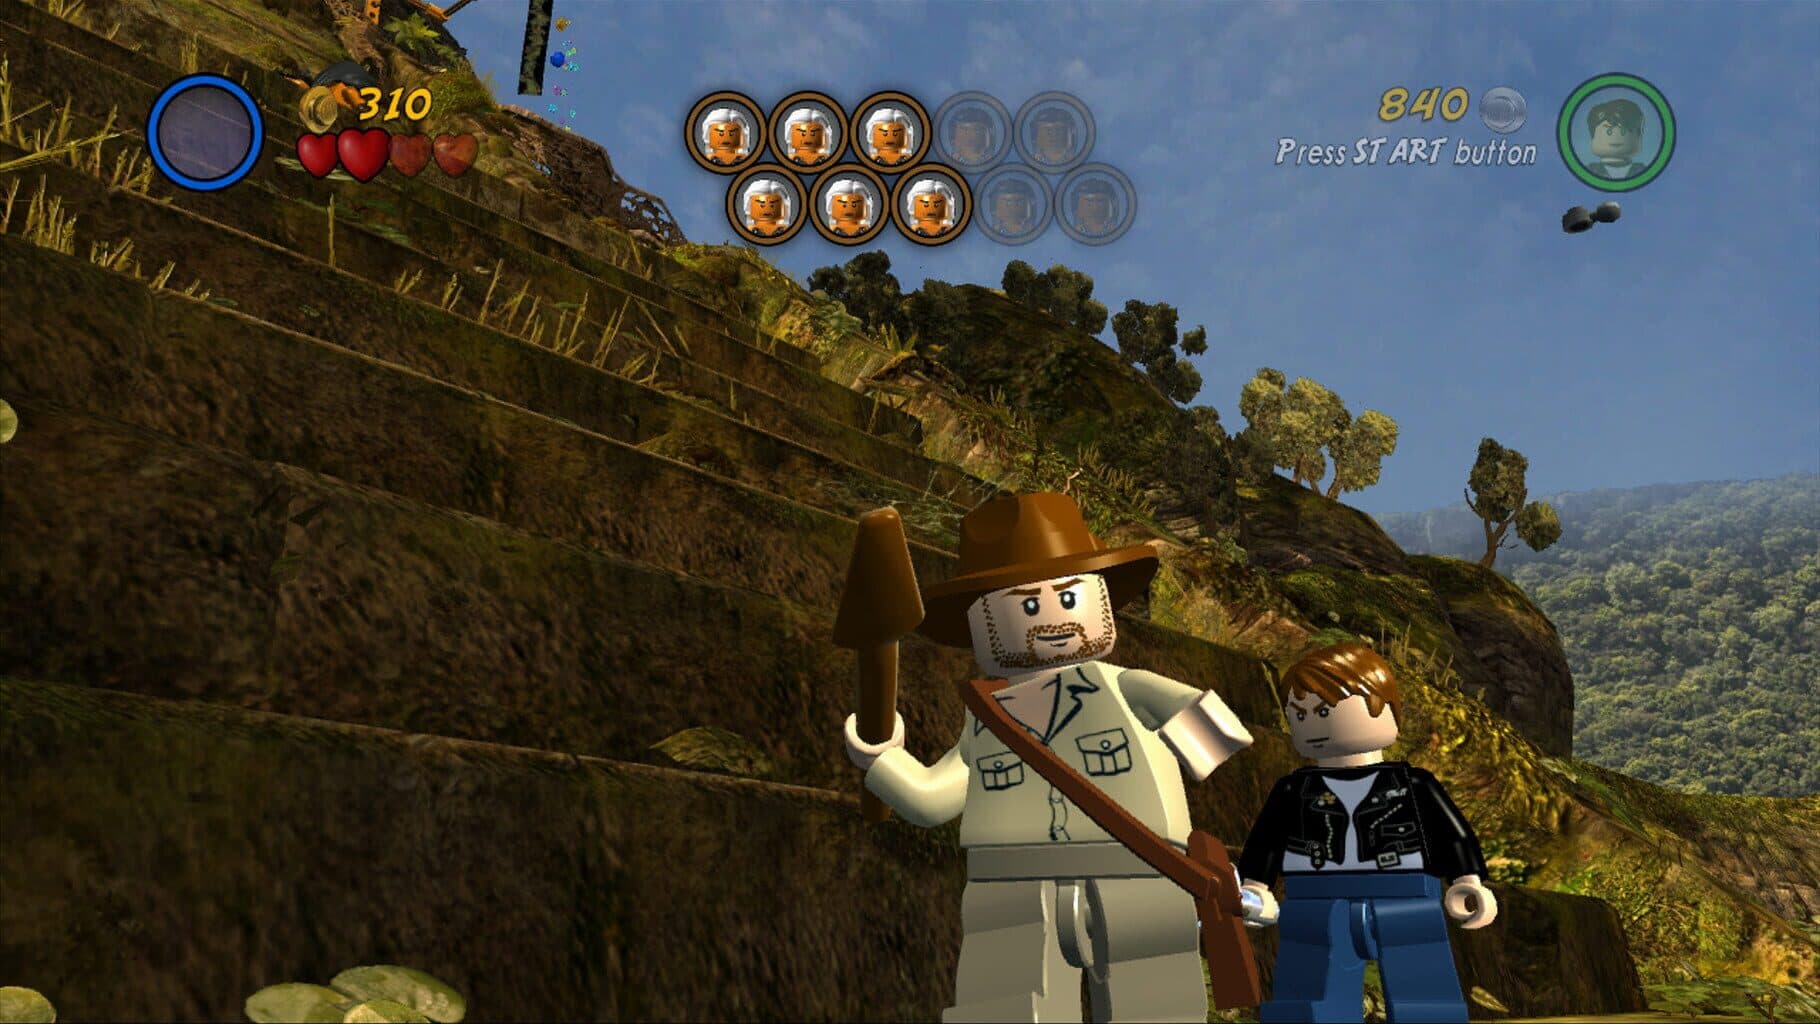 LEGO Indiana Jones 2: The Adventure Continues Image